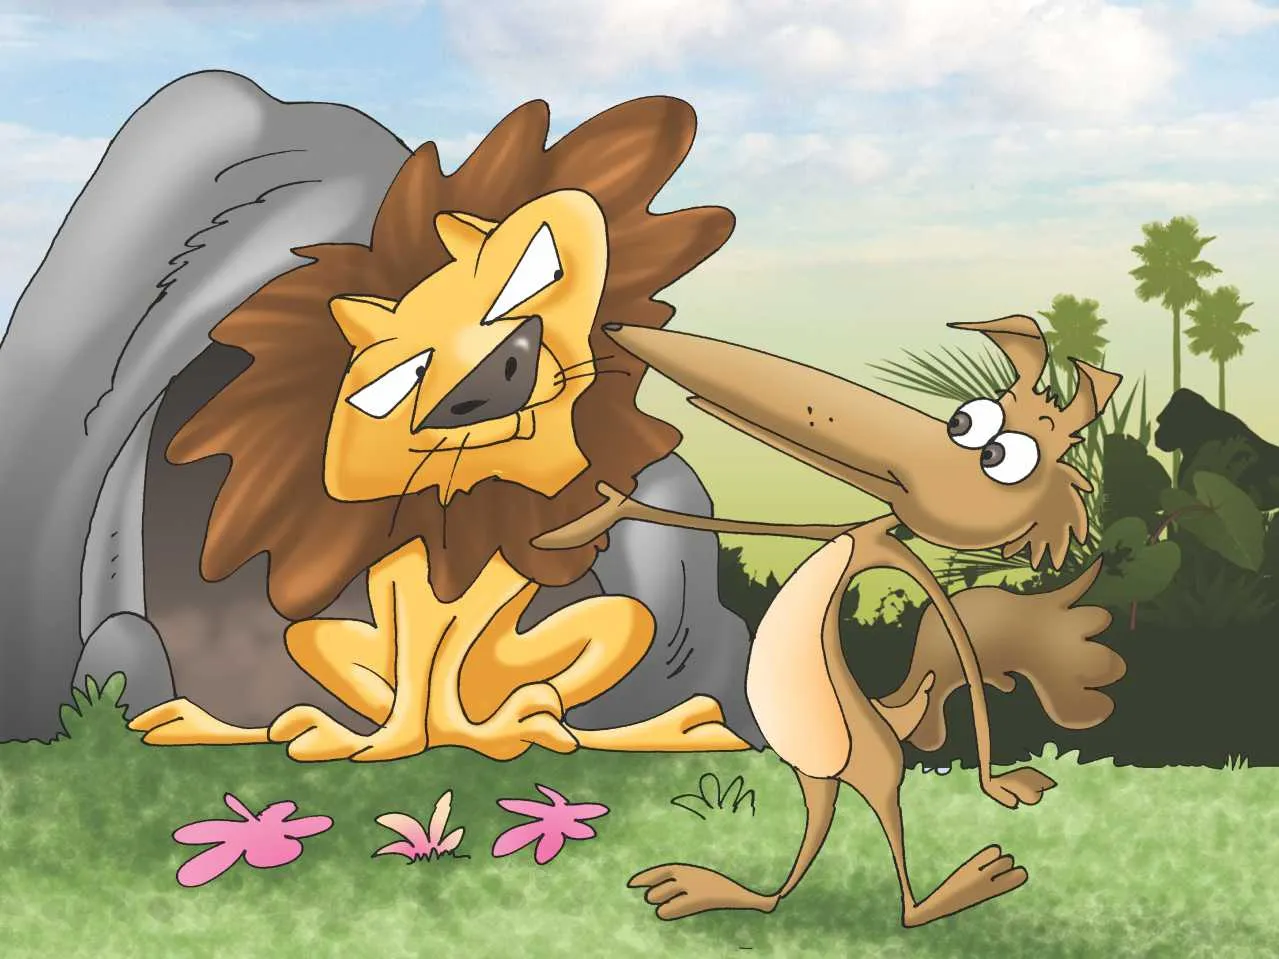 Lion with a fox cartoon image